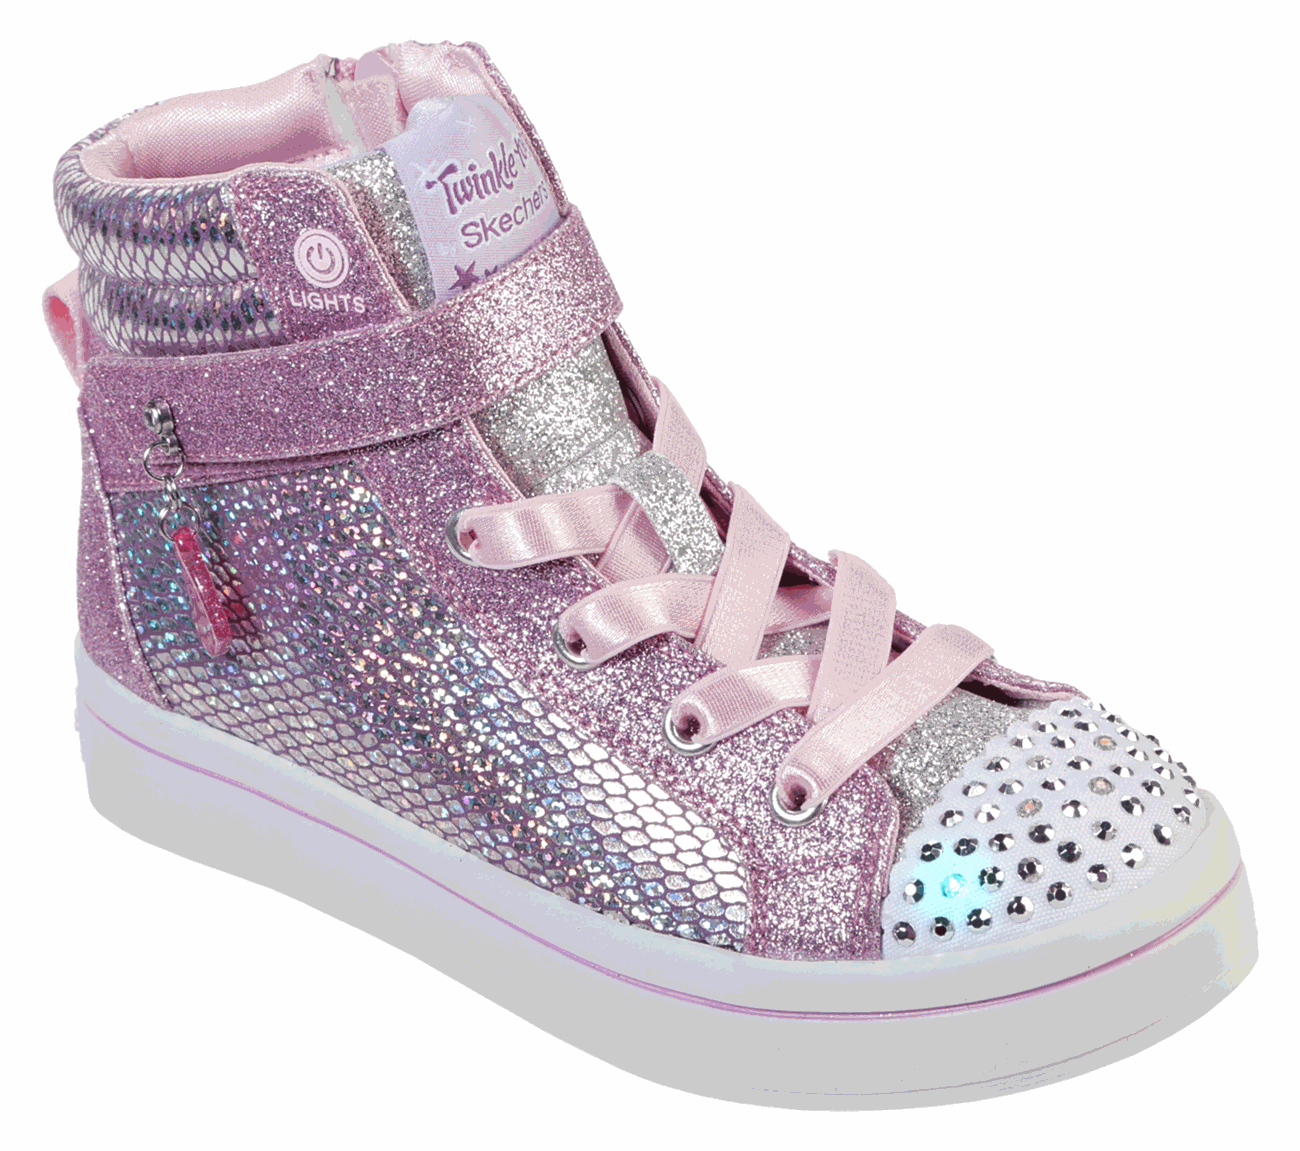 Details about Skechers Girls' Twinkle Toes Twi Lites Glitter Up Shoe ...